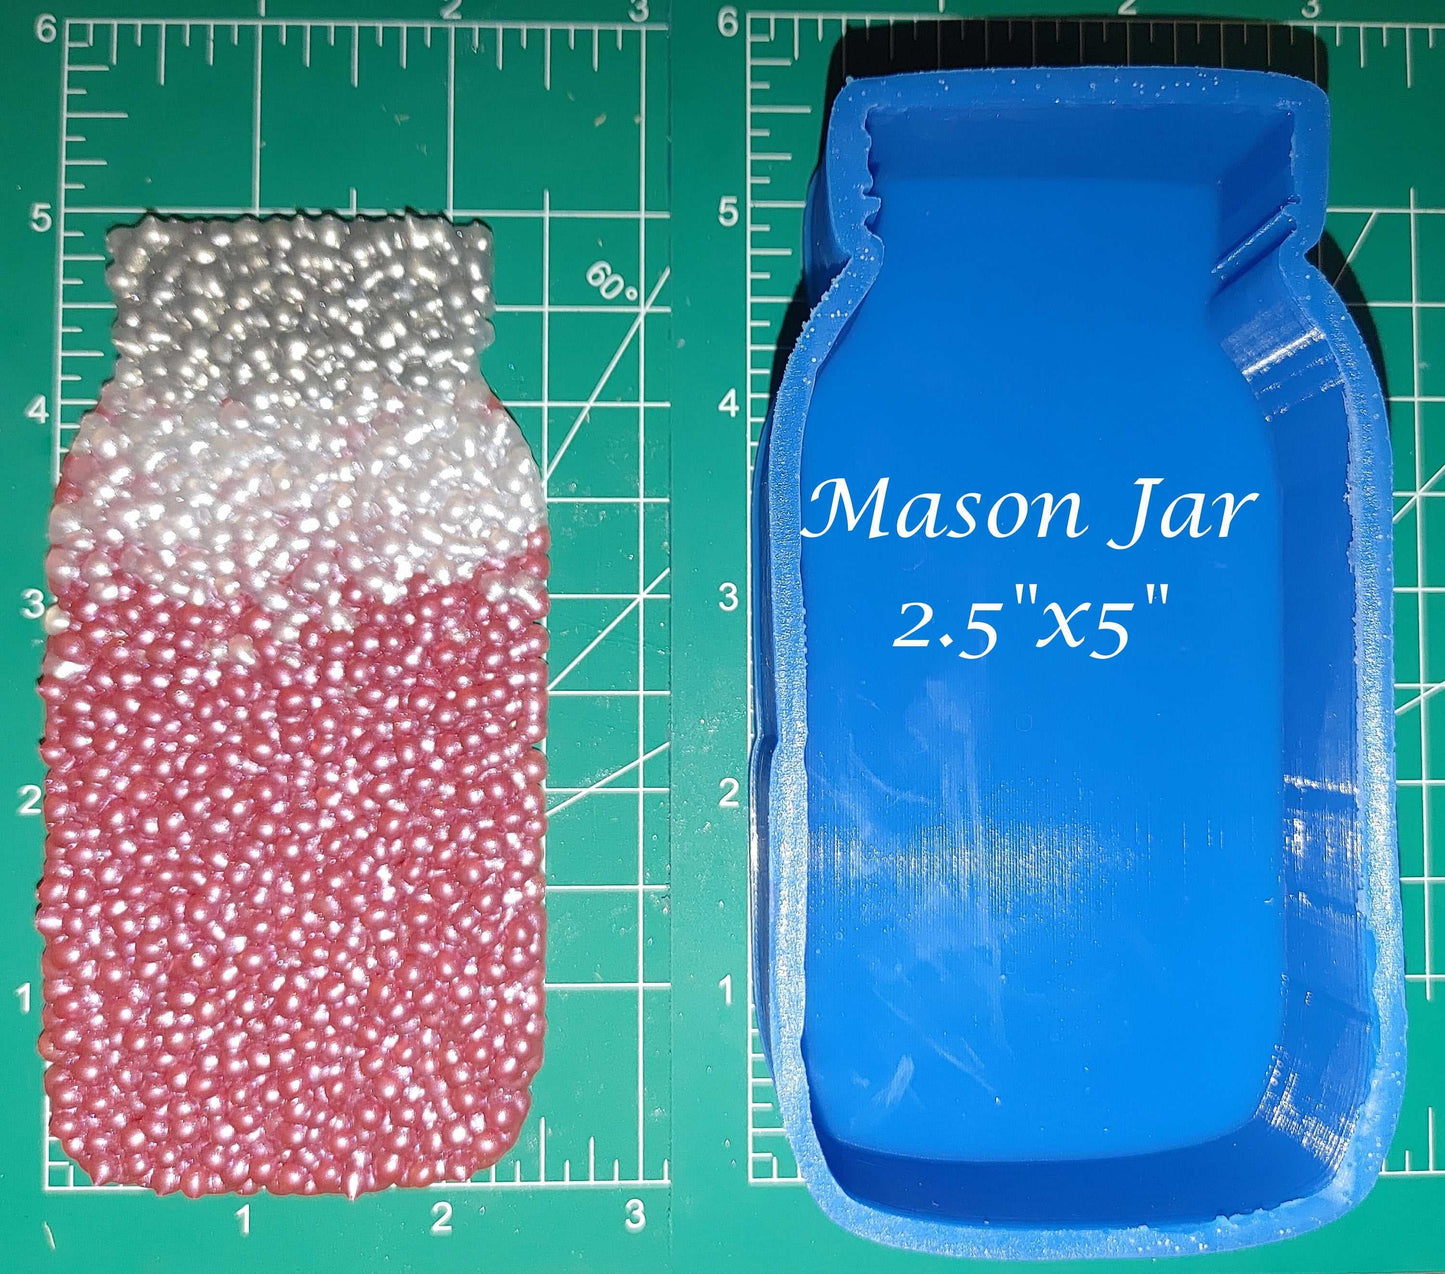 Mason Jar - Silicone Freshie Mold